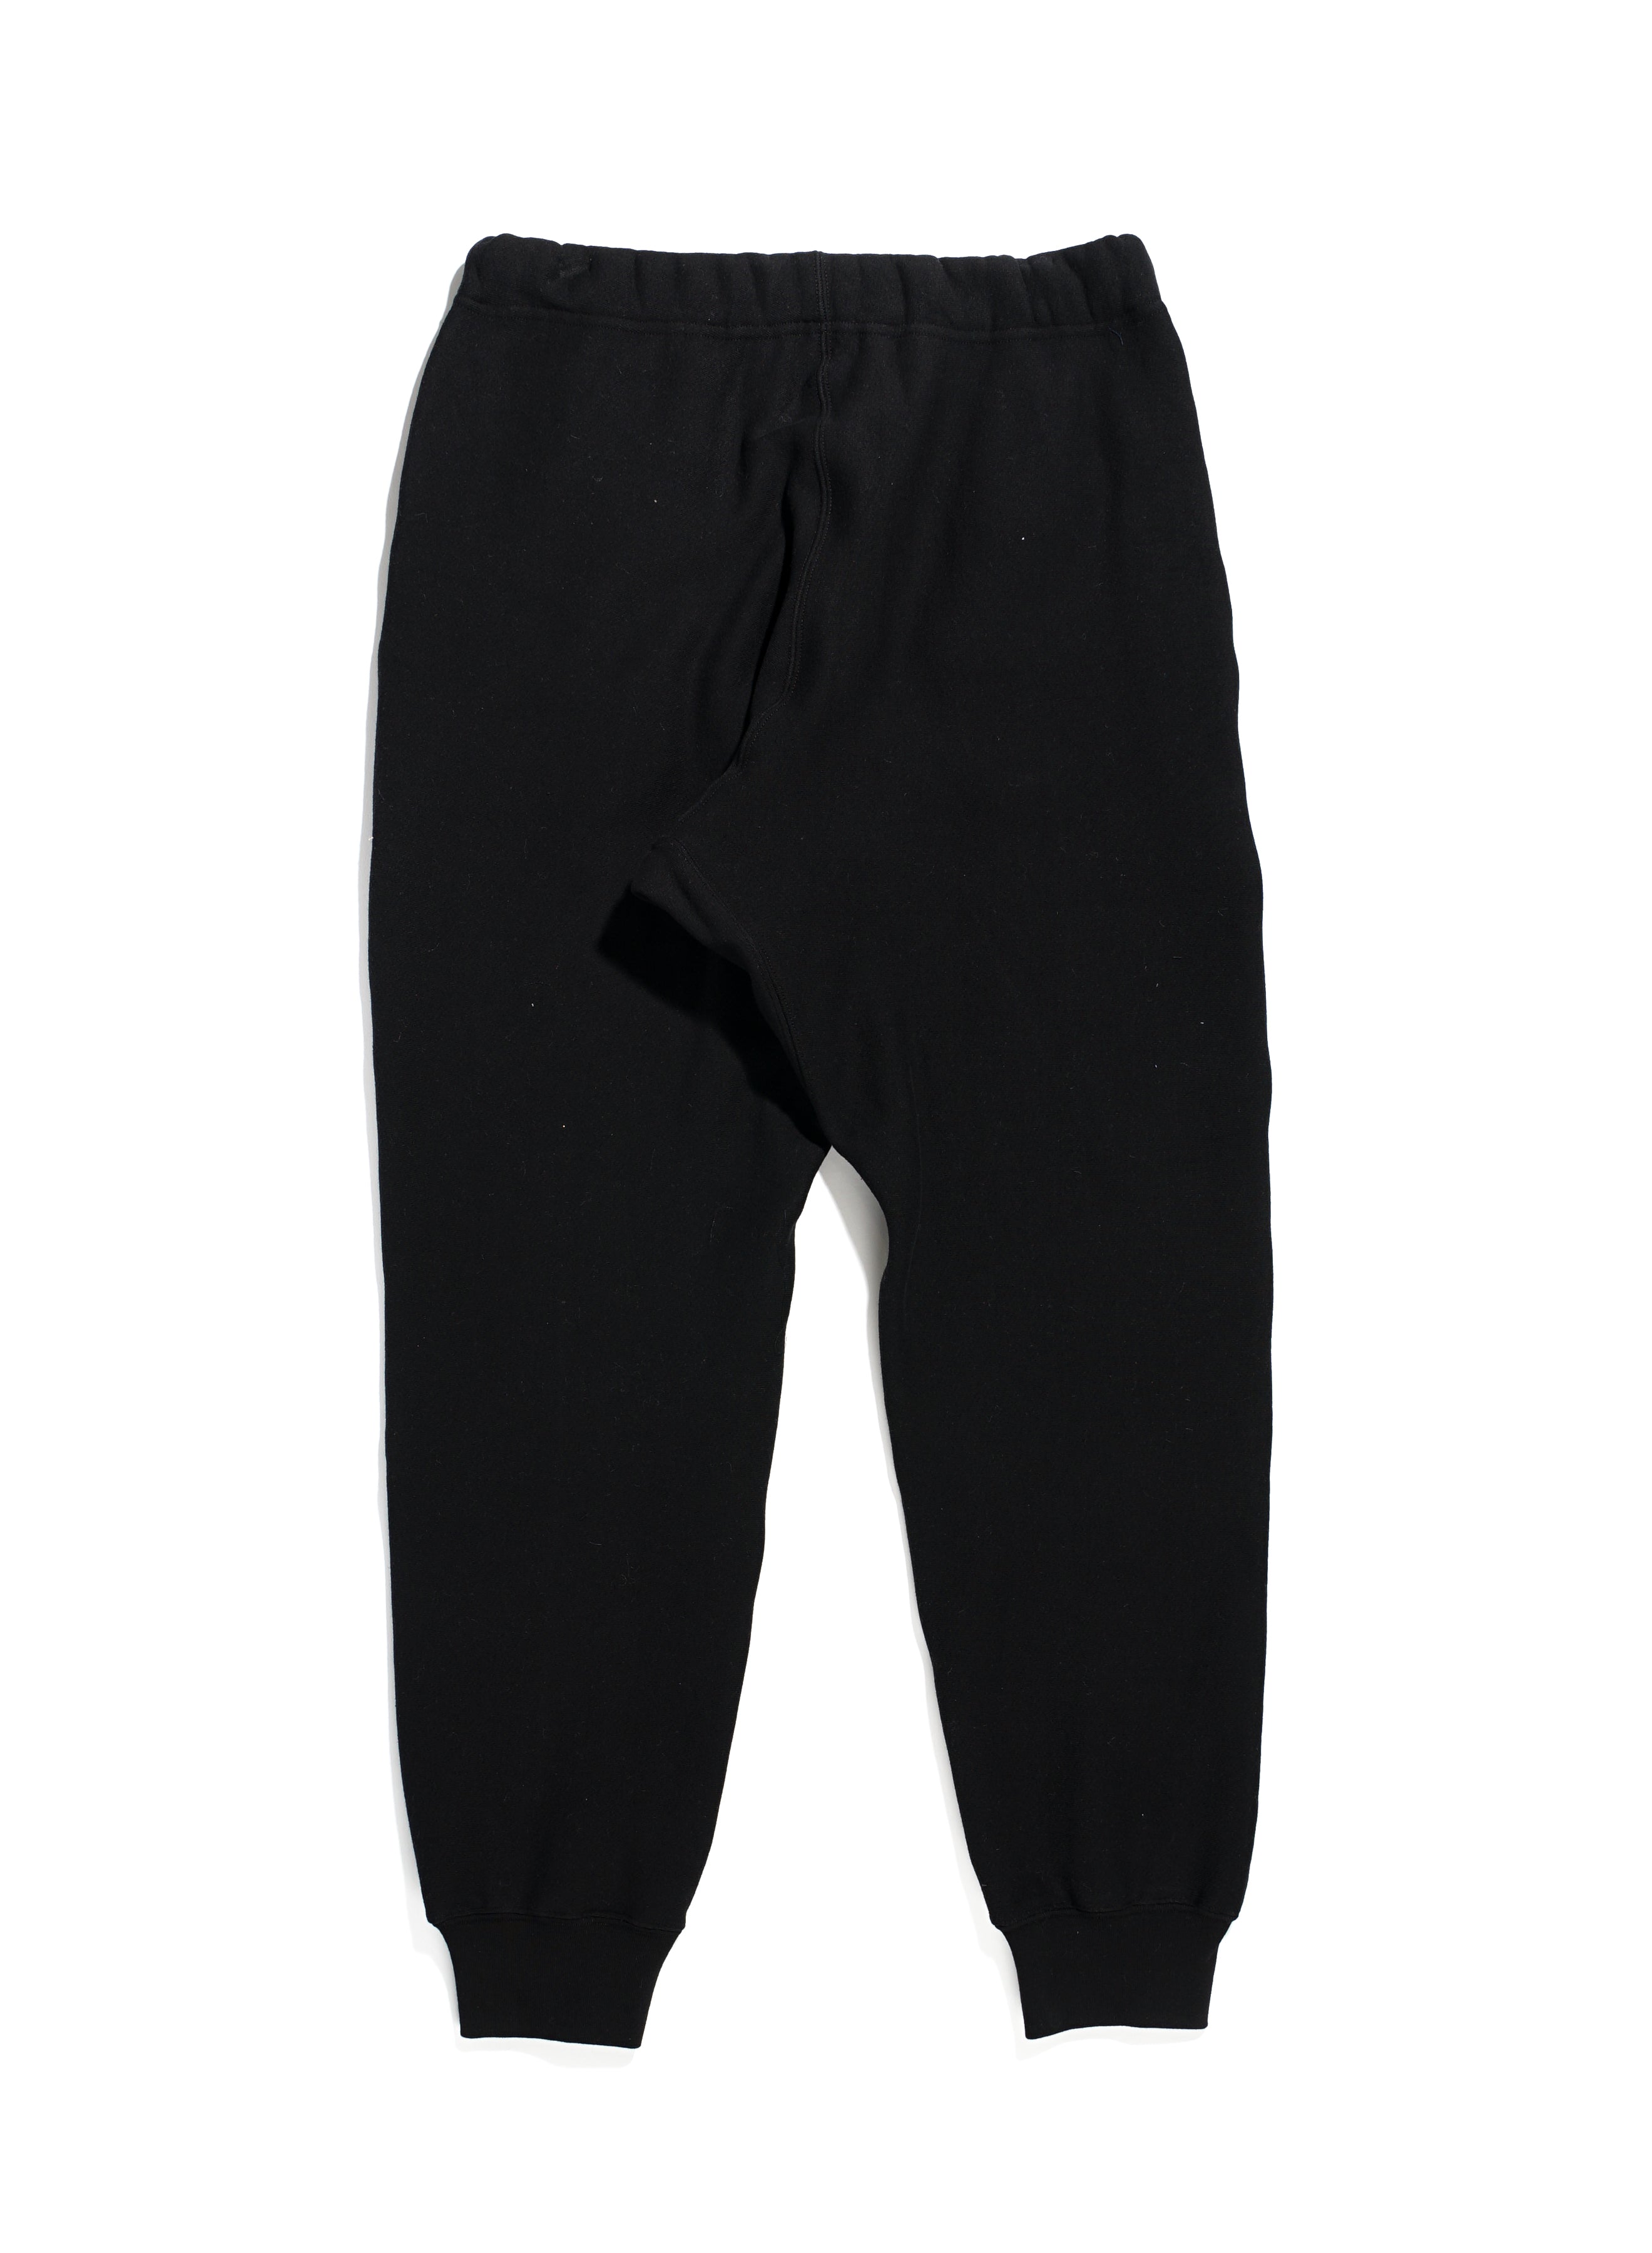 Sweat Pant - Black 12oz Cotton Fleece